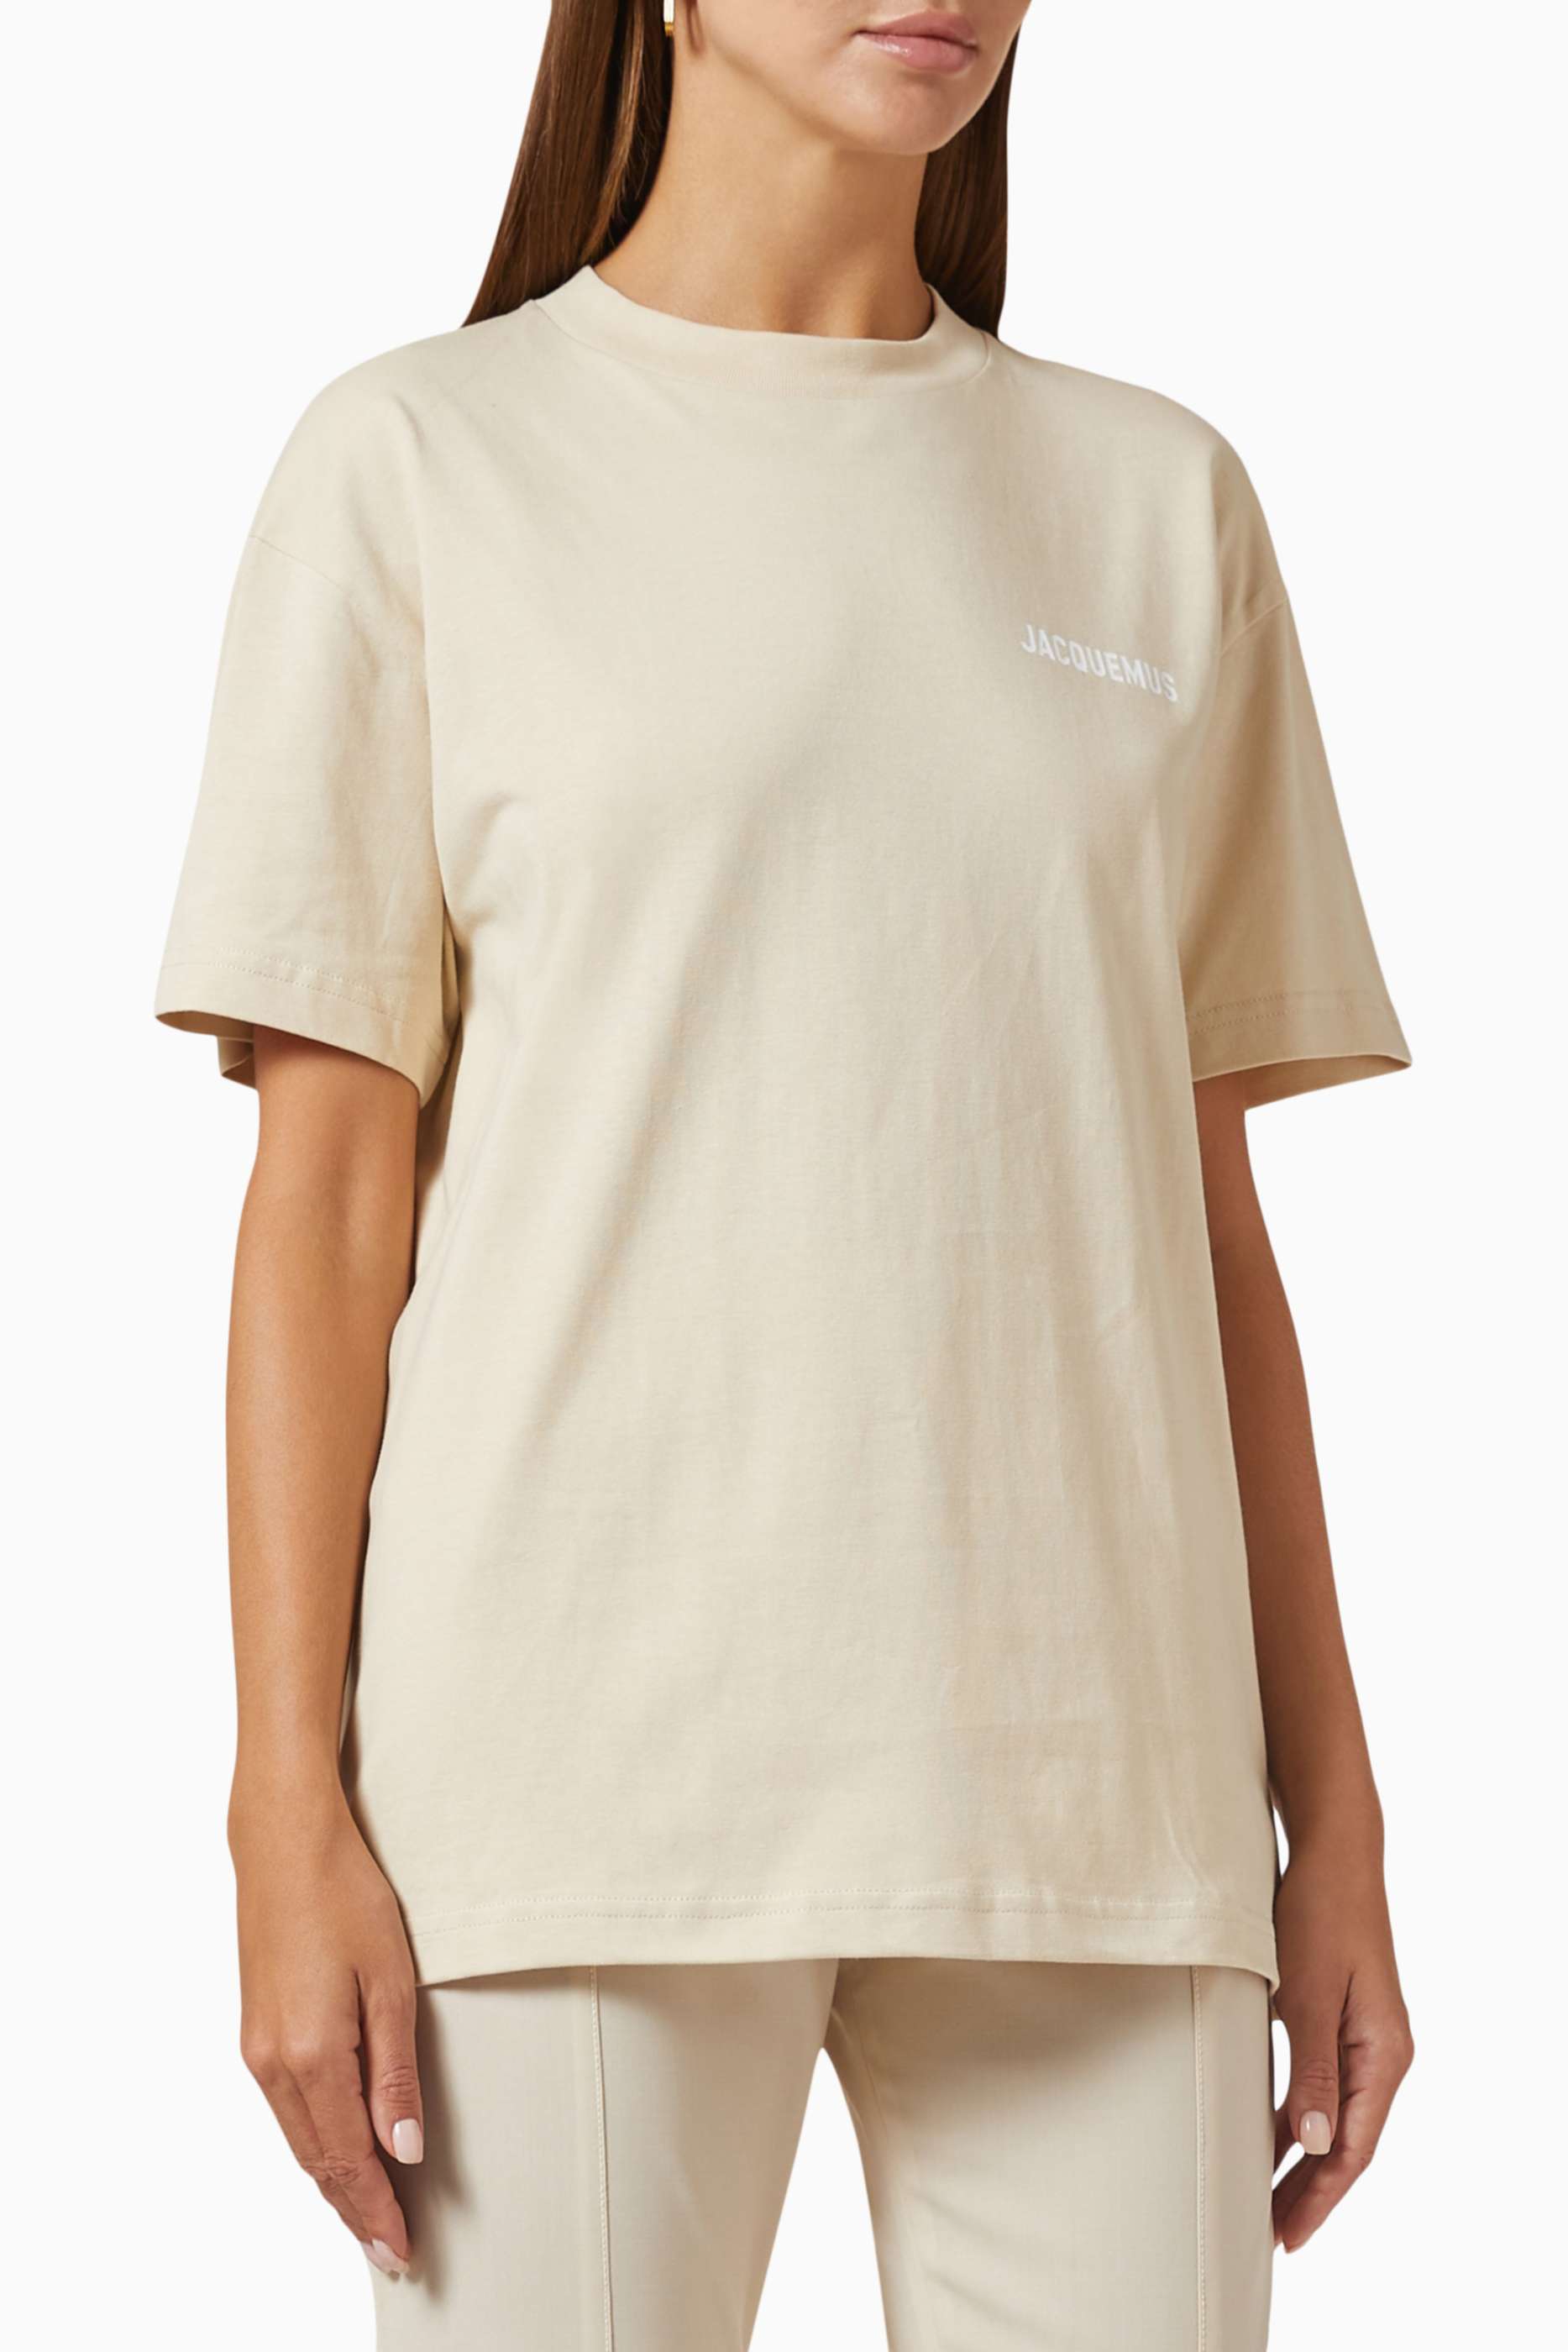 shop-jacquemus-logo-t-shirt-in-cotton-jersey-for-women